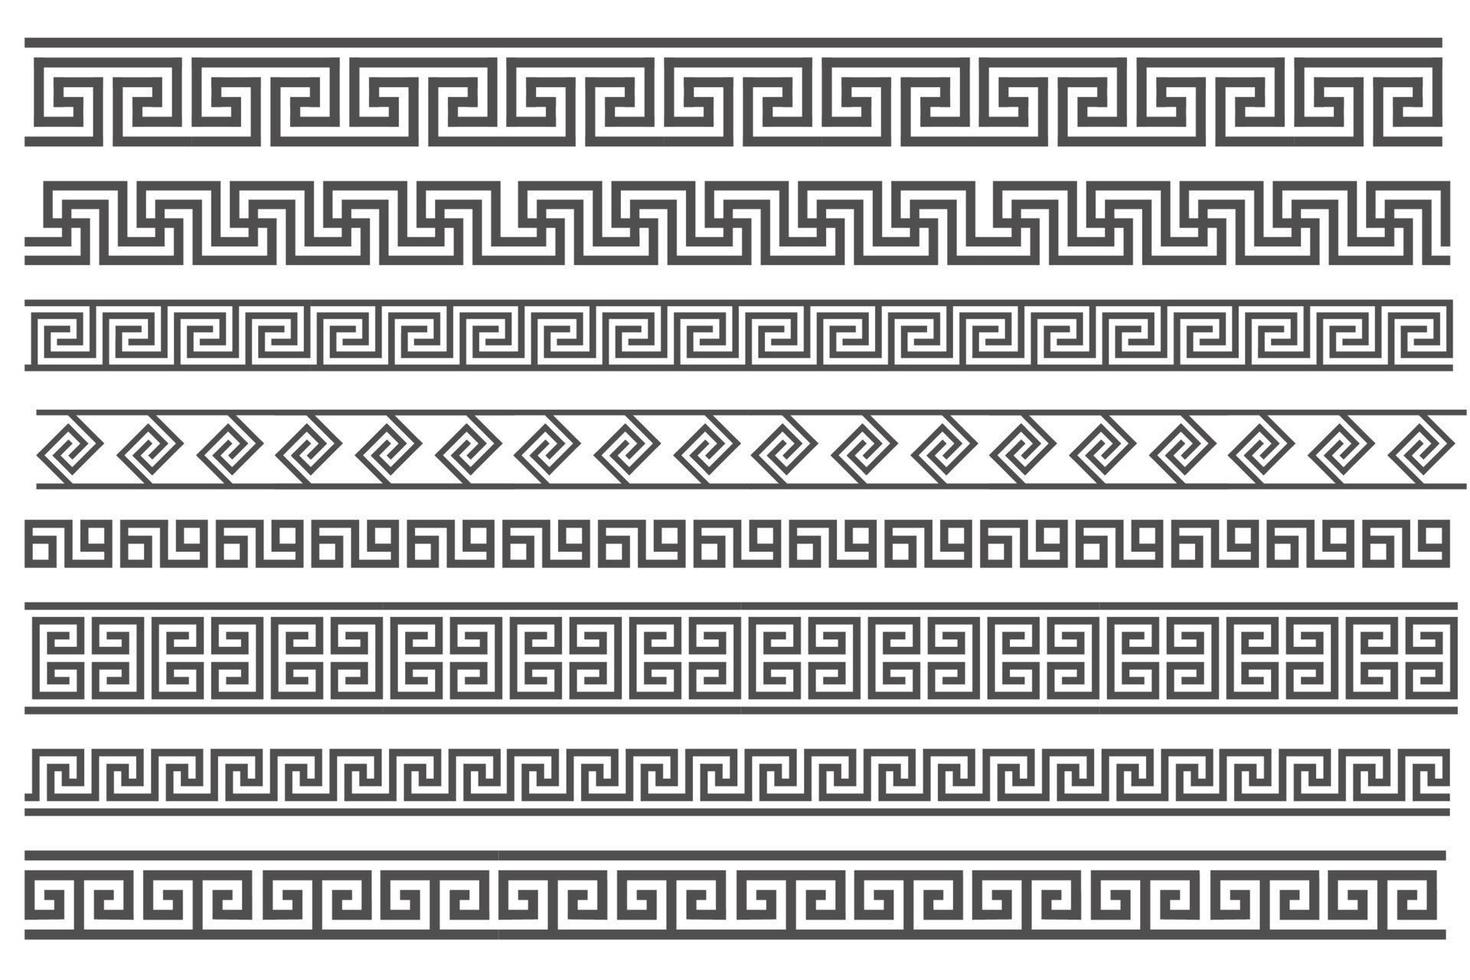 Griekse stijl naadloze frames. geometrische grensreeks. vector ornament patroon. mediterrane decorelementen